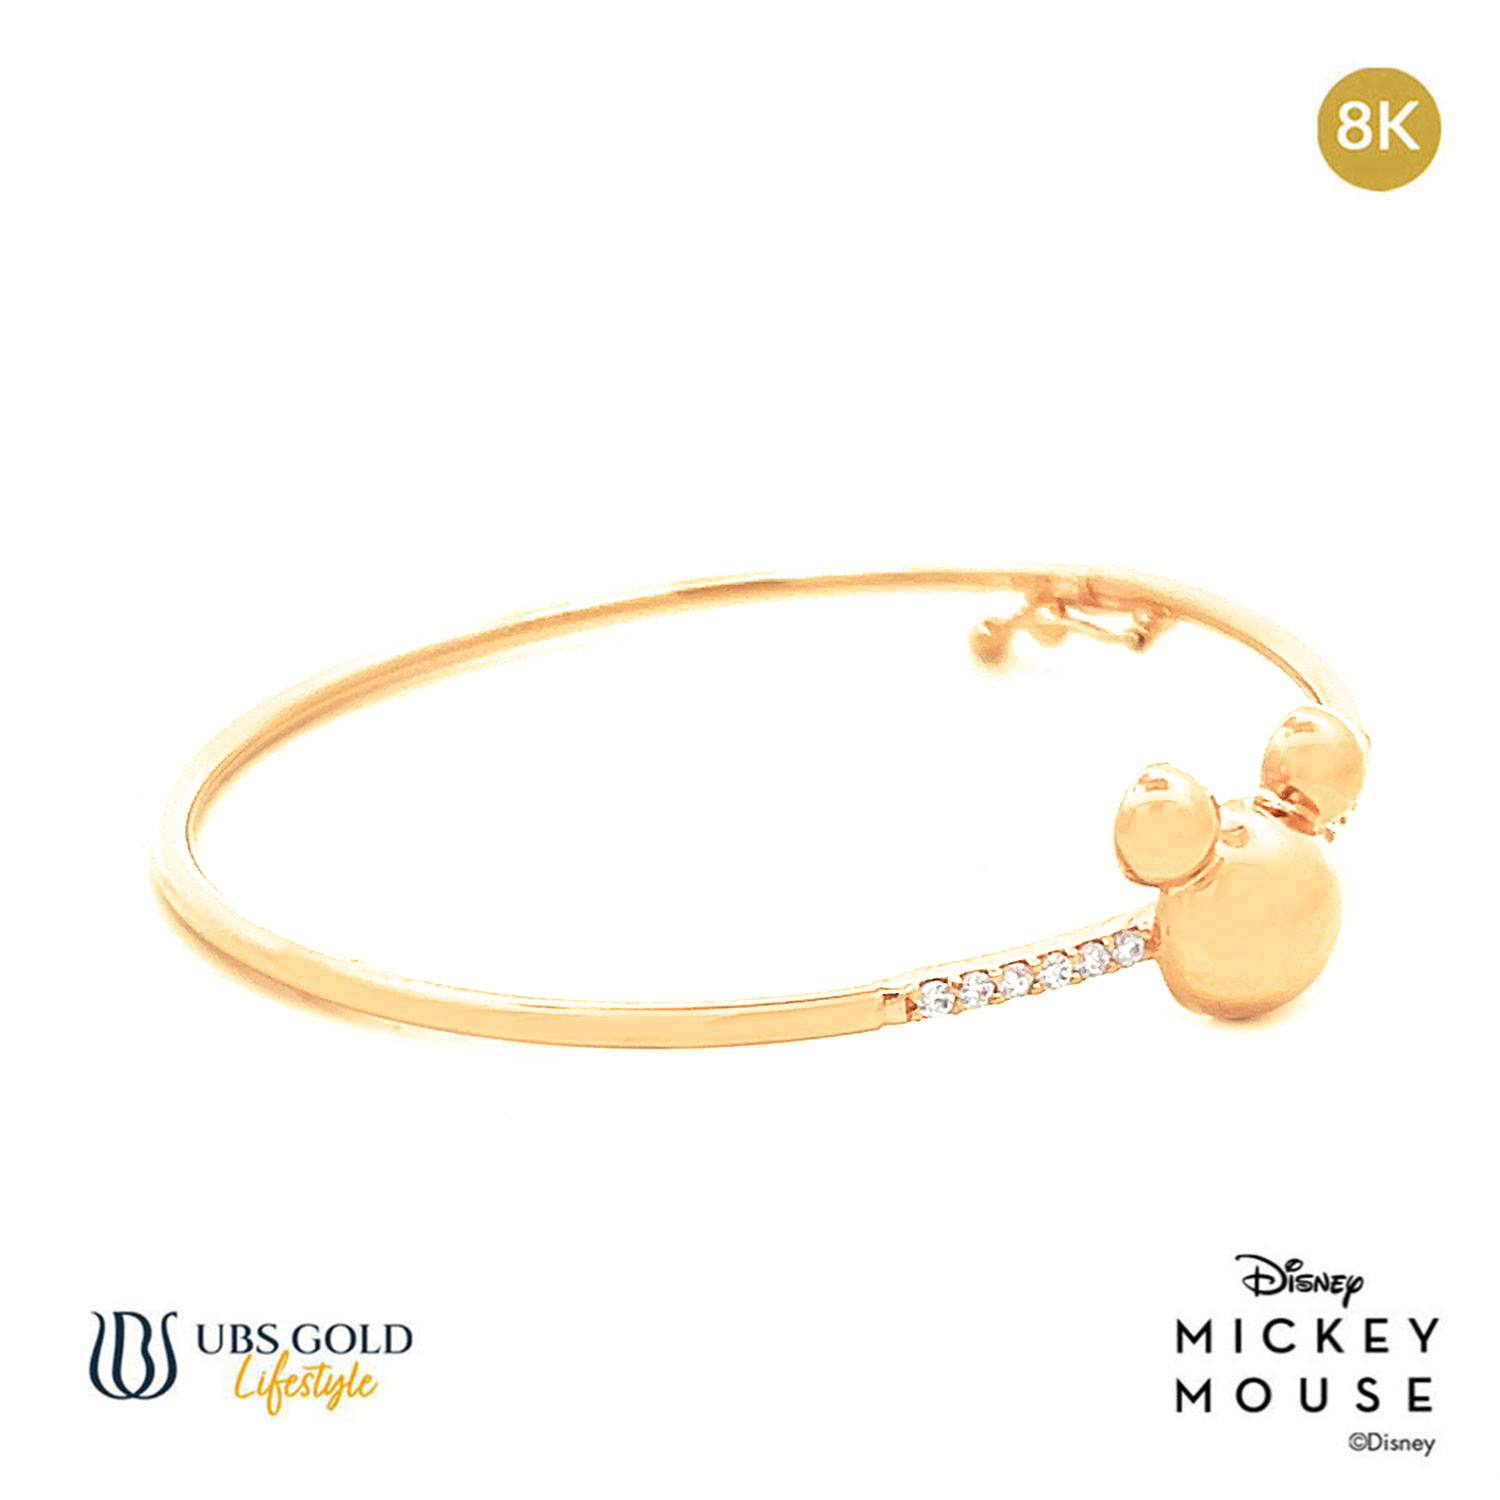 UBS Gold Gelang Emas Bayi Disney Mickey Mouse - Vgy0145K - 8K